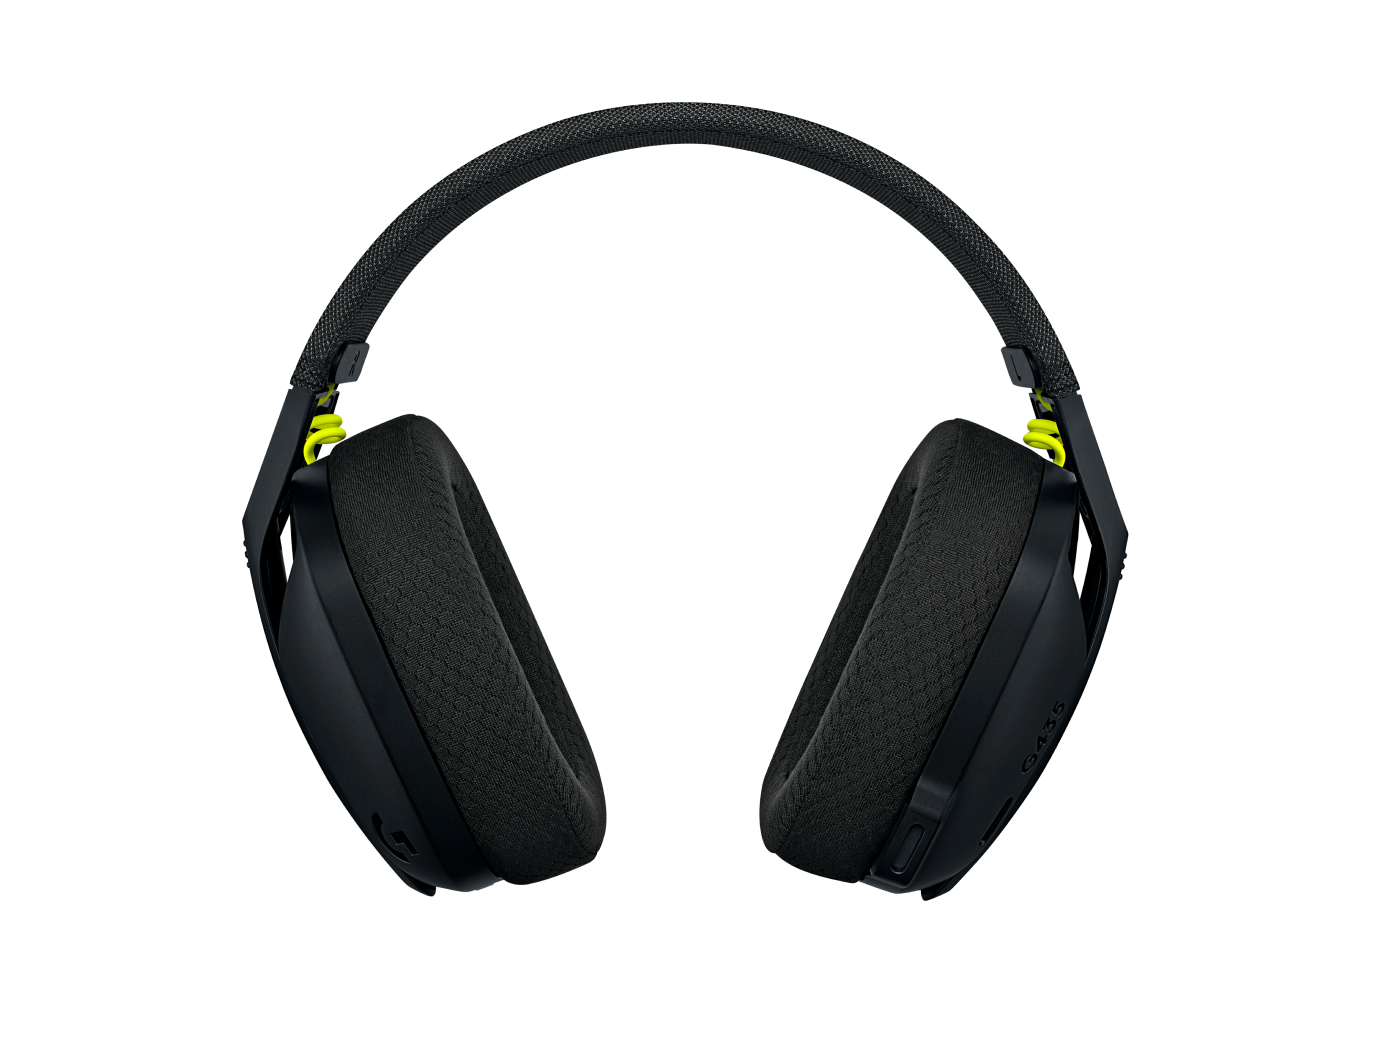 Image of G435 LIGHTSPEED Wireless Gaming Headset and Neon Yellow